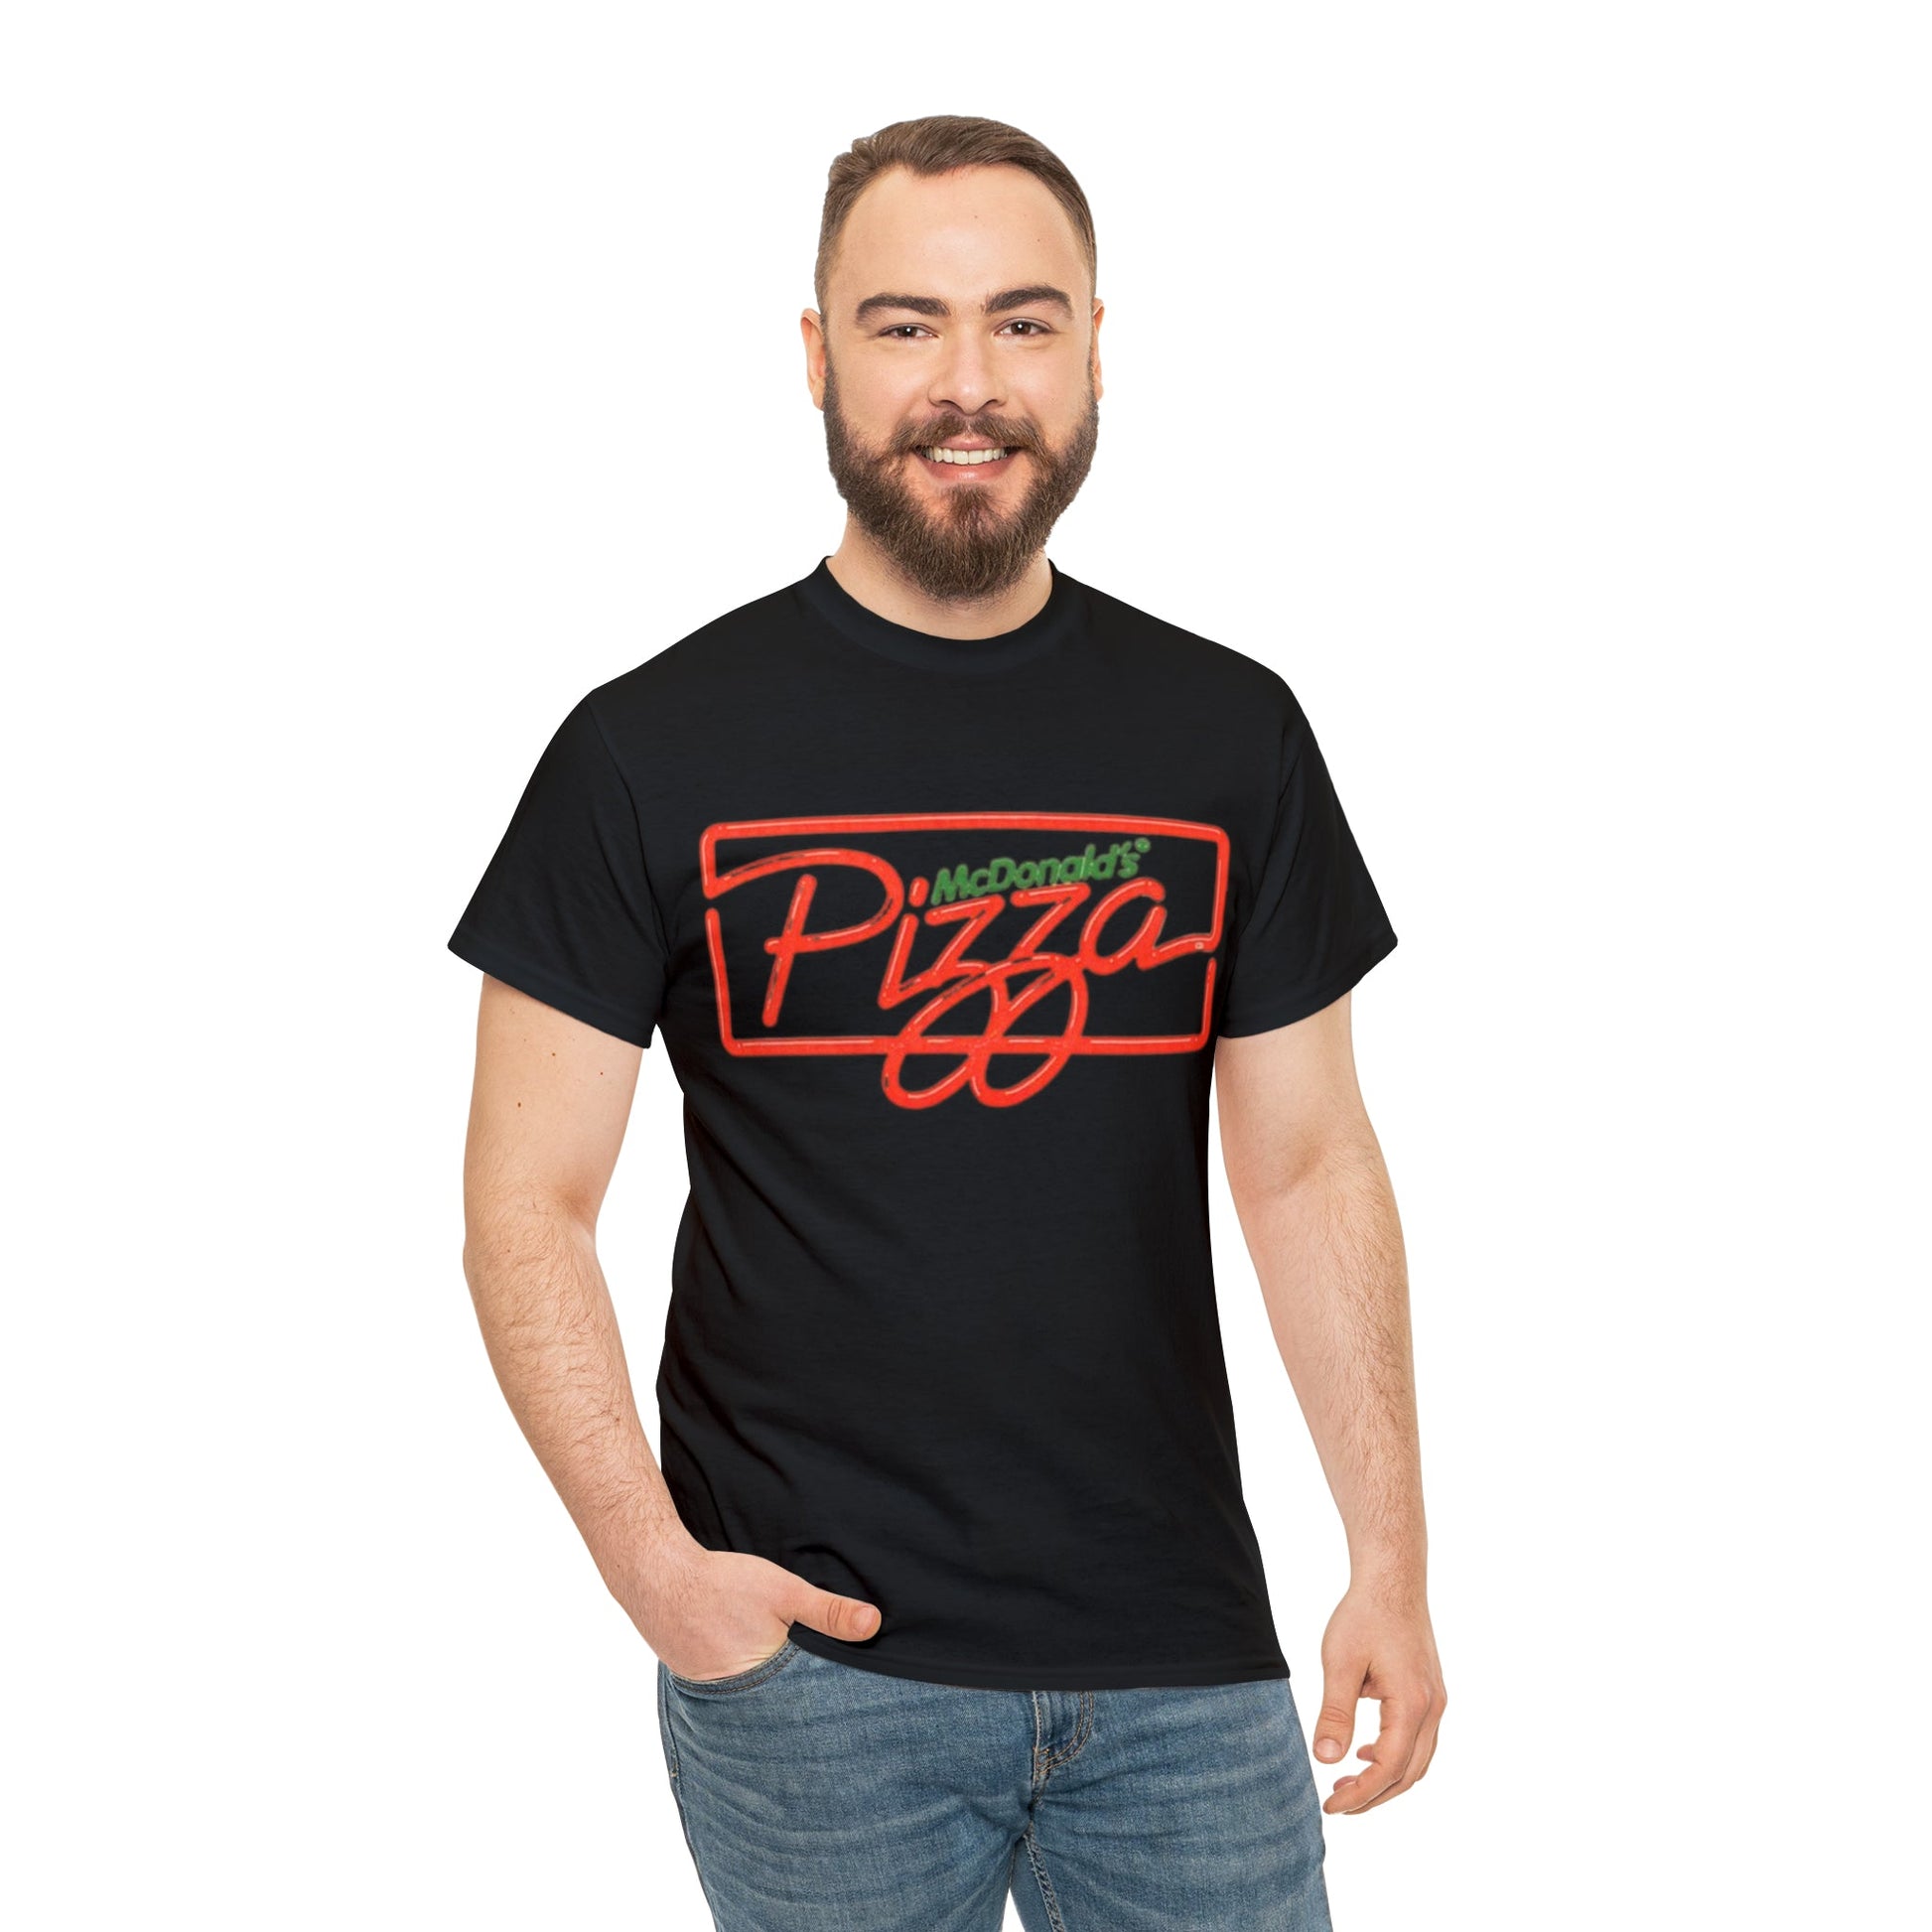 McPizza Mcdonalds Pizza T-Shirt - RetroTeeShop